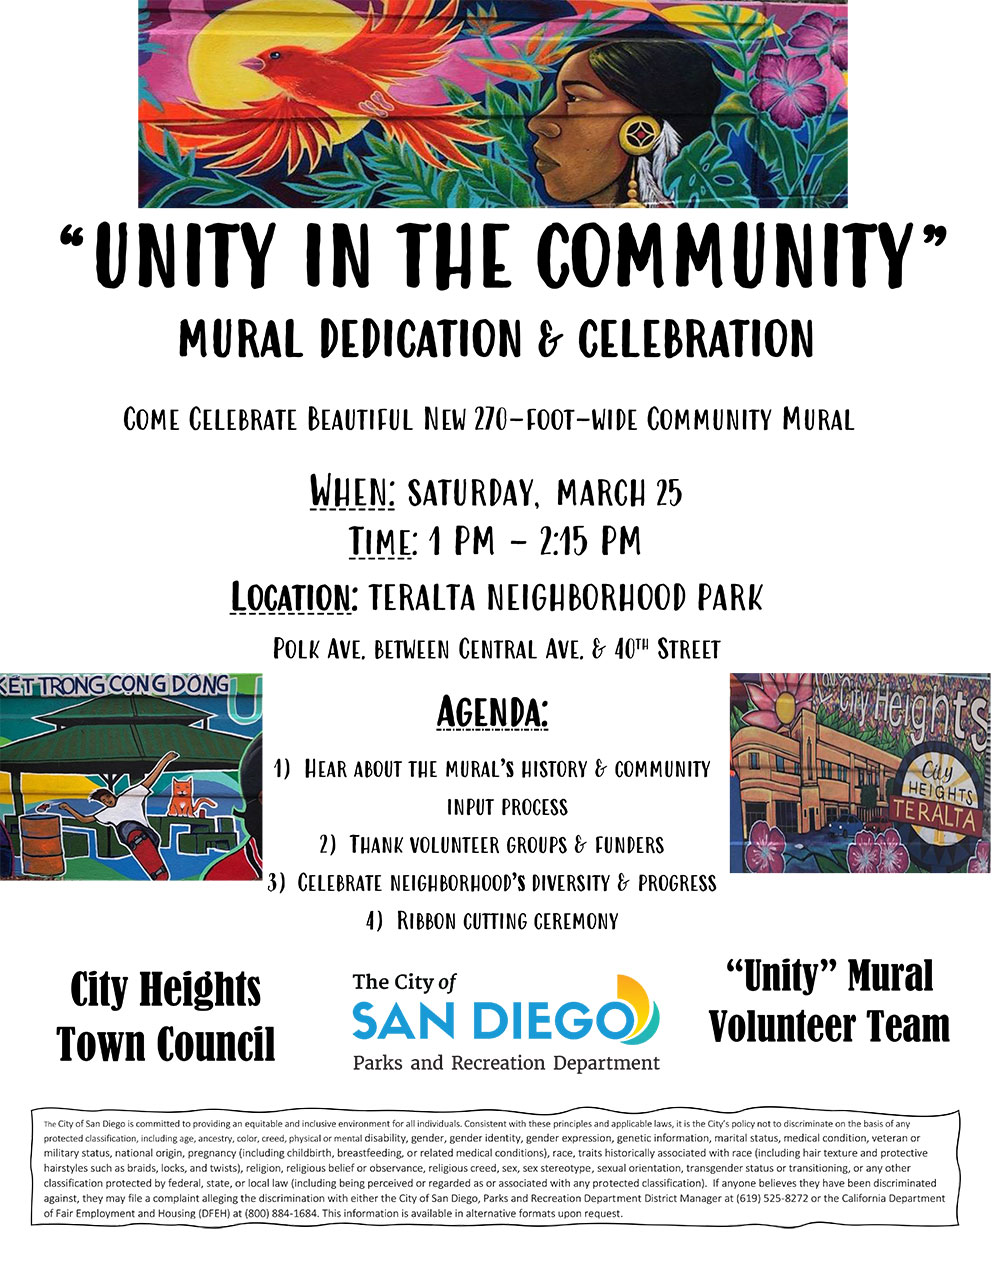 "Unity in the Community" Mural Dedication & Celebration flyer